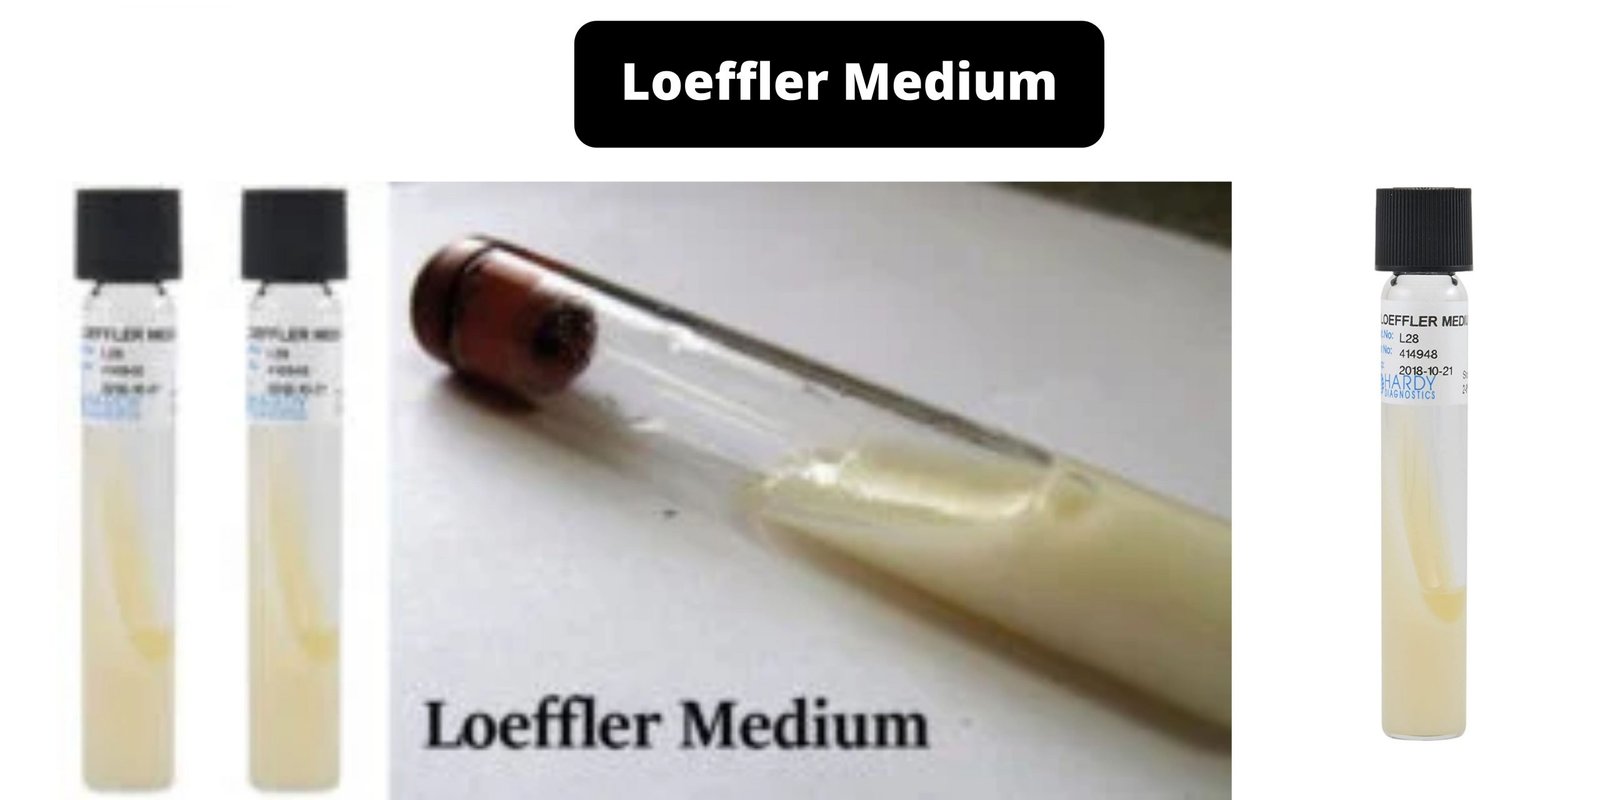 Loeffler Medium - Composition, Principle, Preparation, Results, Uses